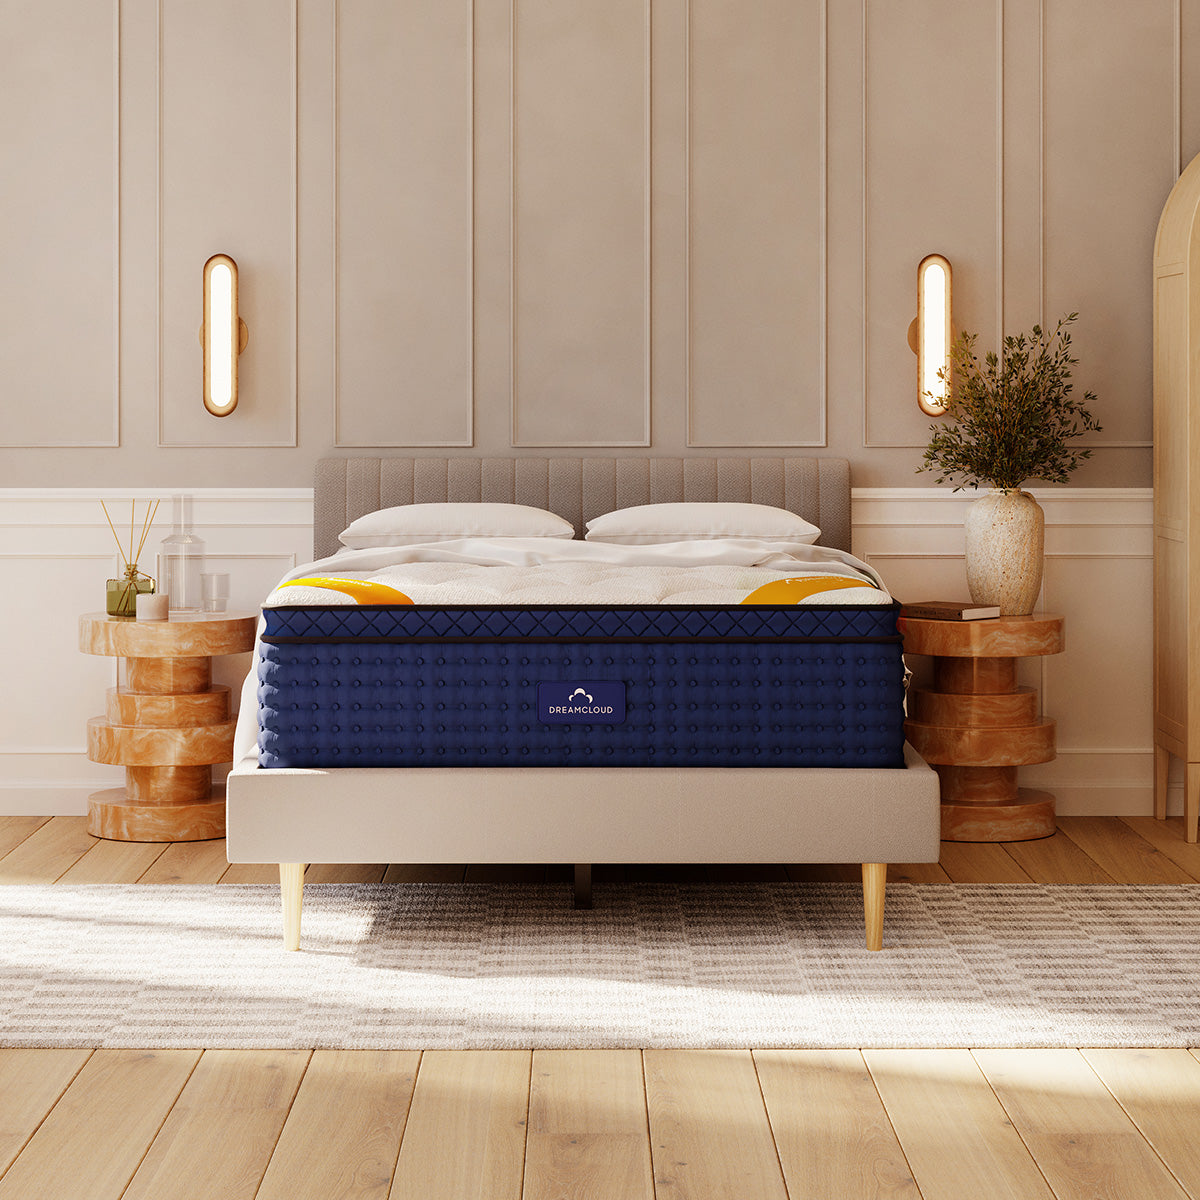 The DreamCloud Premier Rest Hybrid Mattress In Bedroom Front View